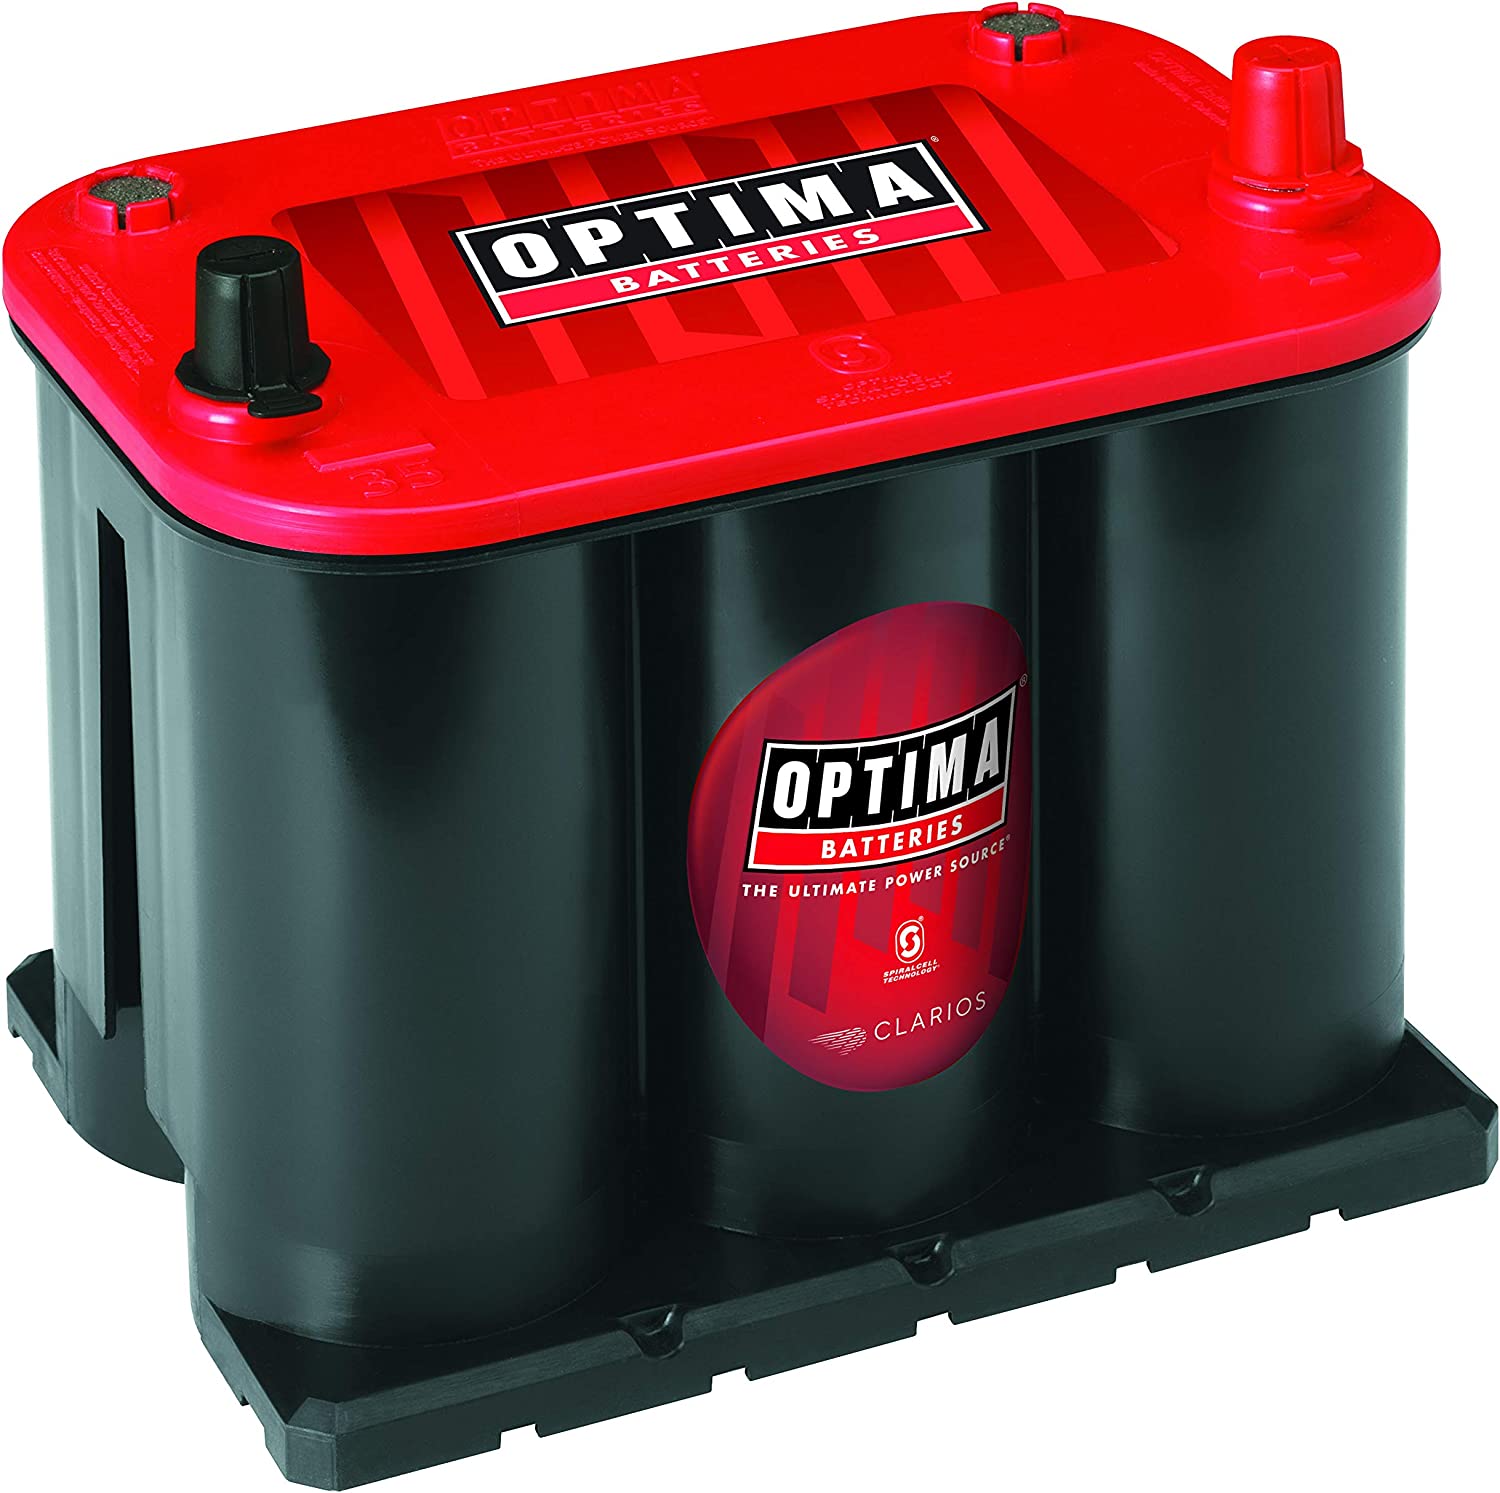 Optima Batteries 8020 164 35 RedTop Starting Battery